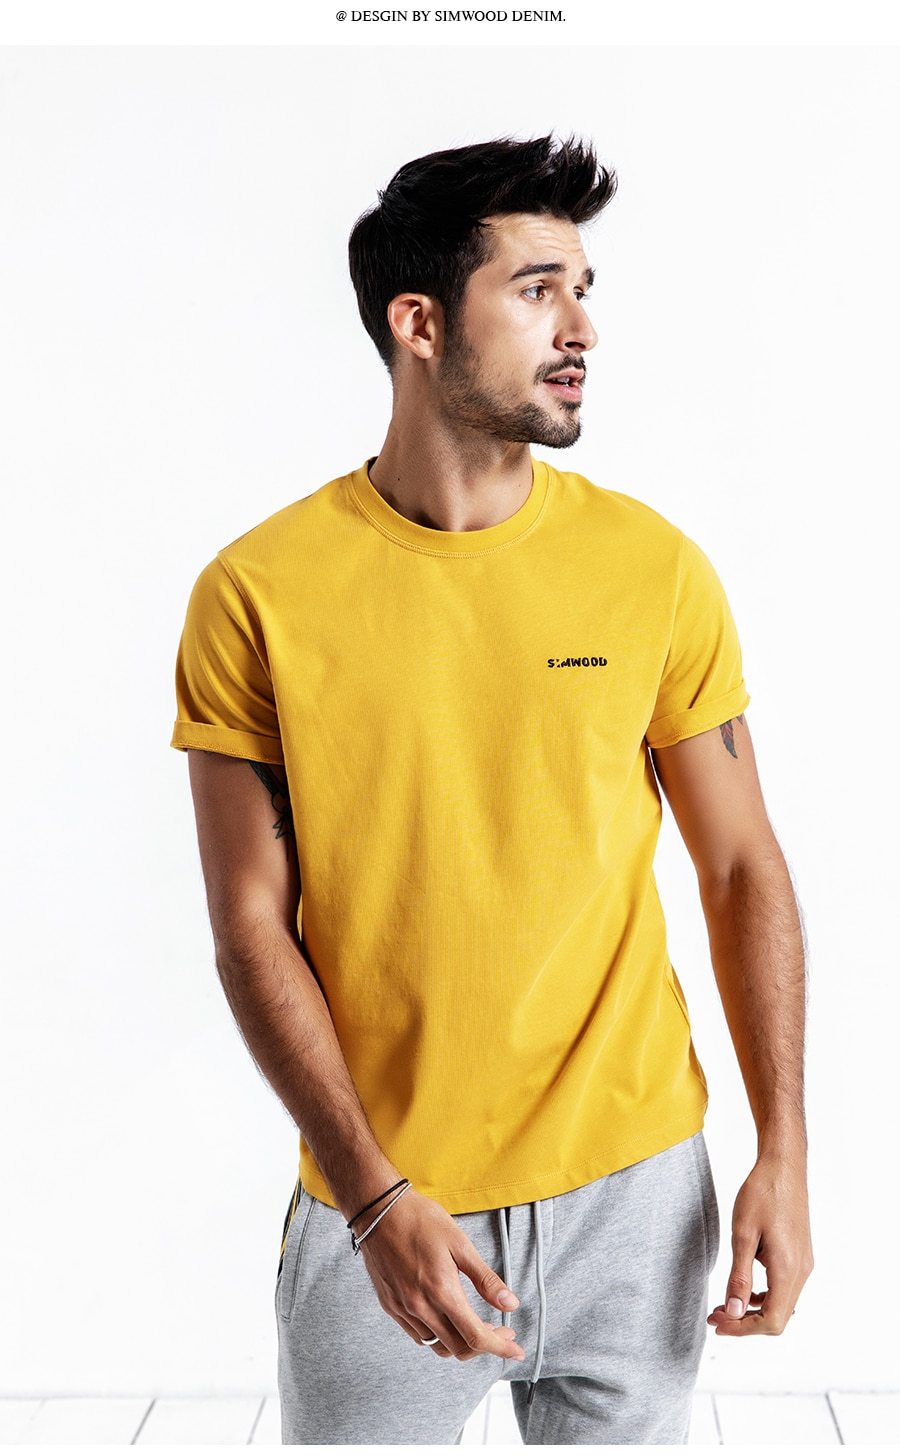 T-Shirt Men 100% Cotton Embroidered Casual t shirt Basics O-neck High